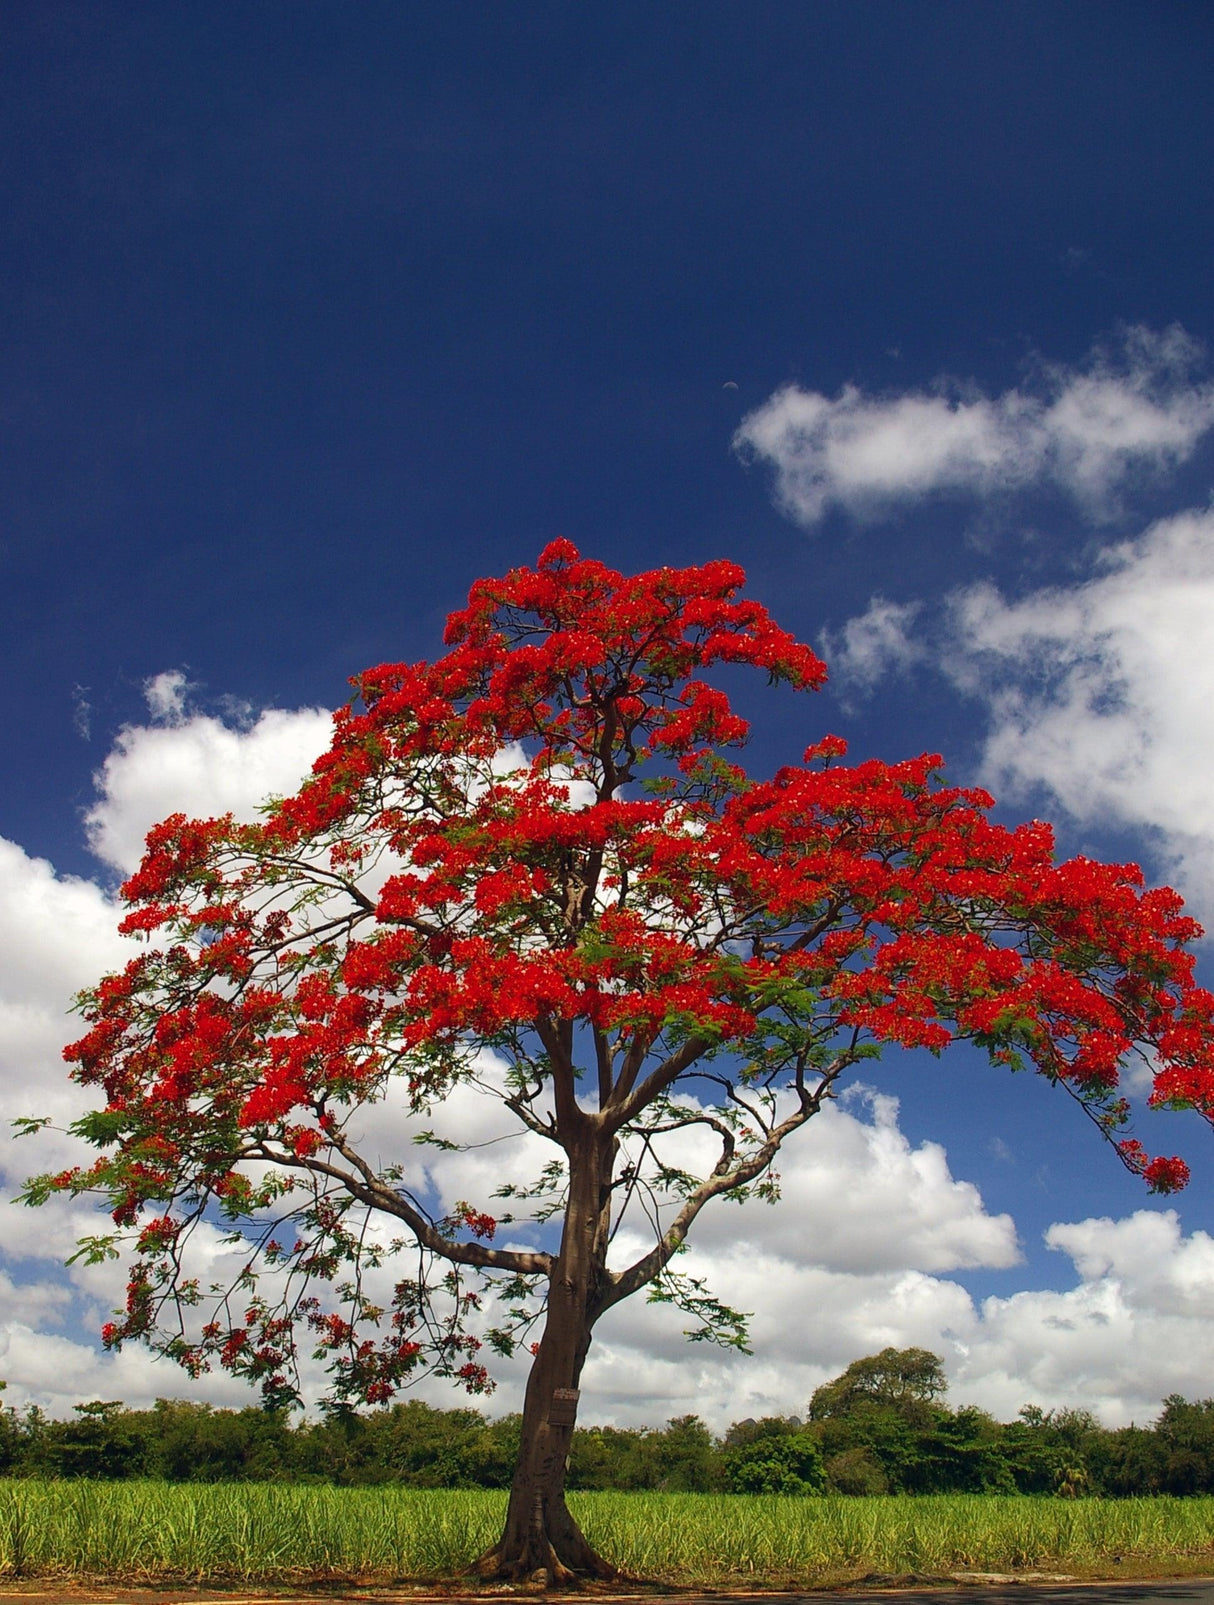 Brachychiton Jerilderie Red 'Flame tree' - Brisbane Plant Nursery